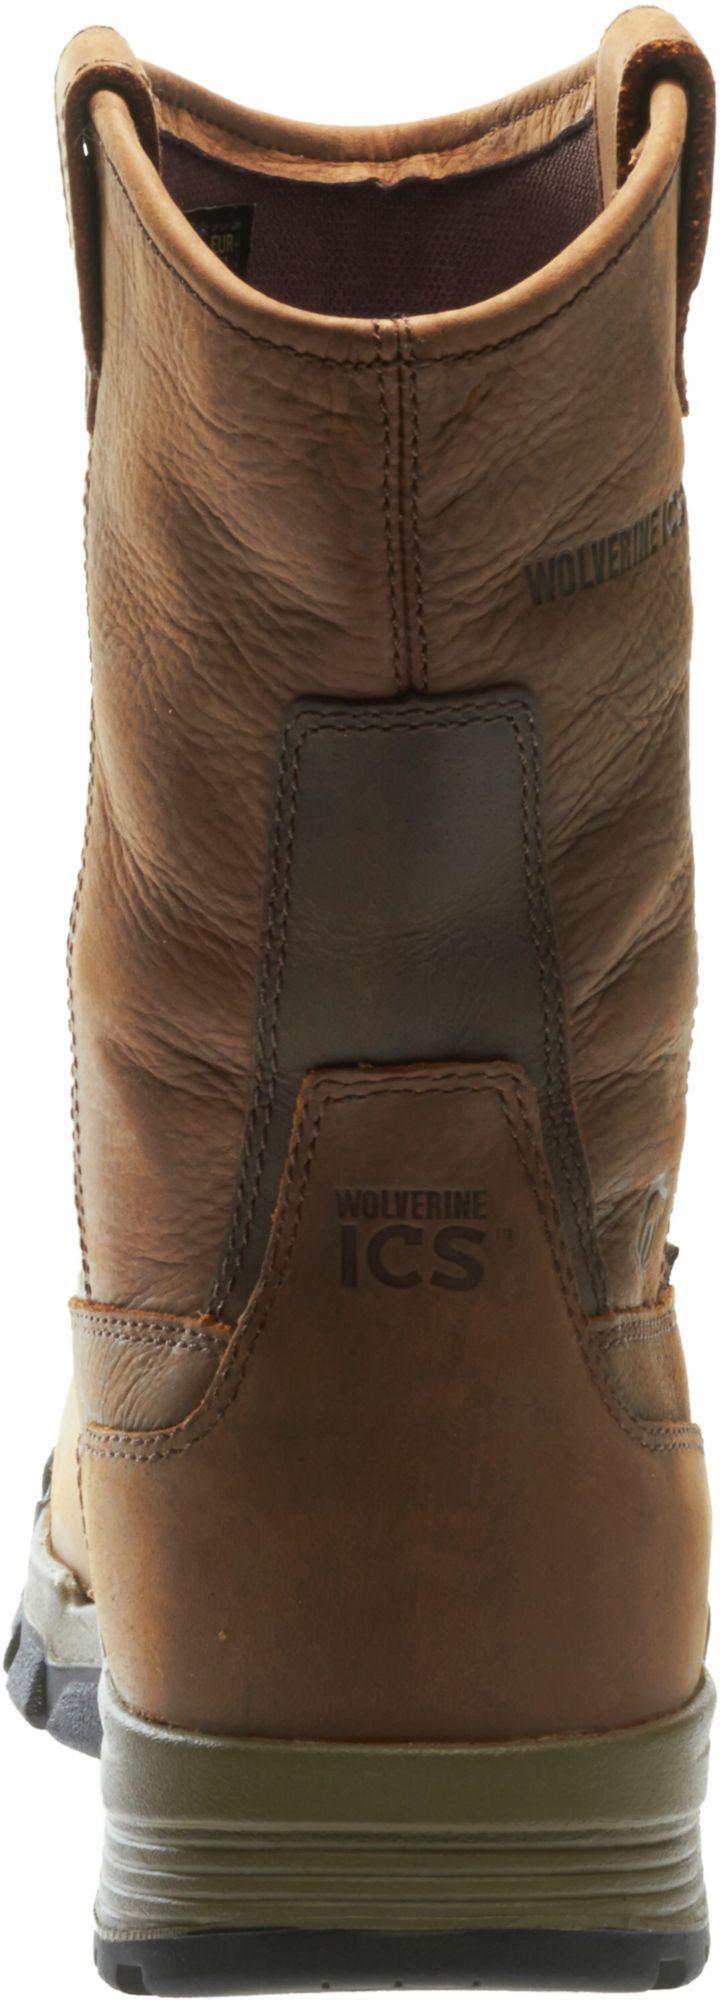 wolverine ics boots